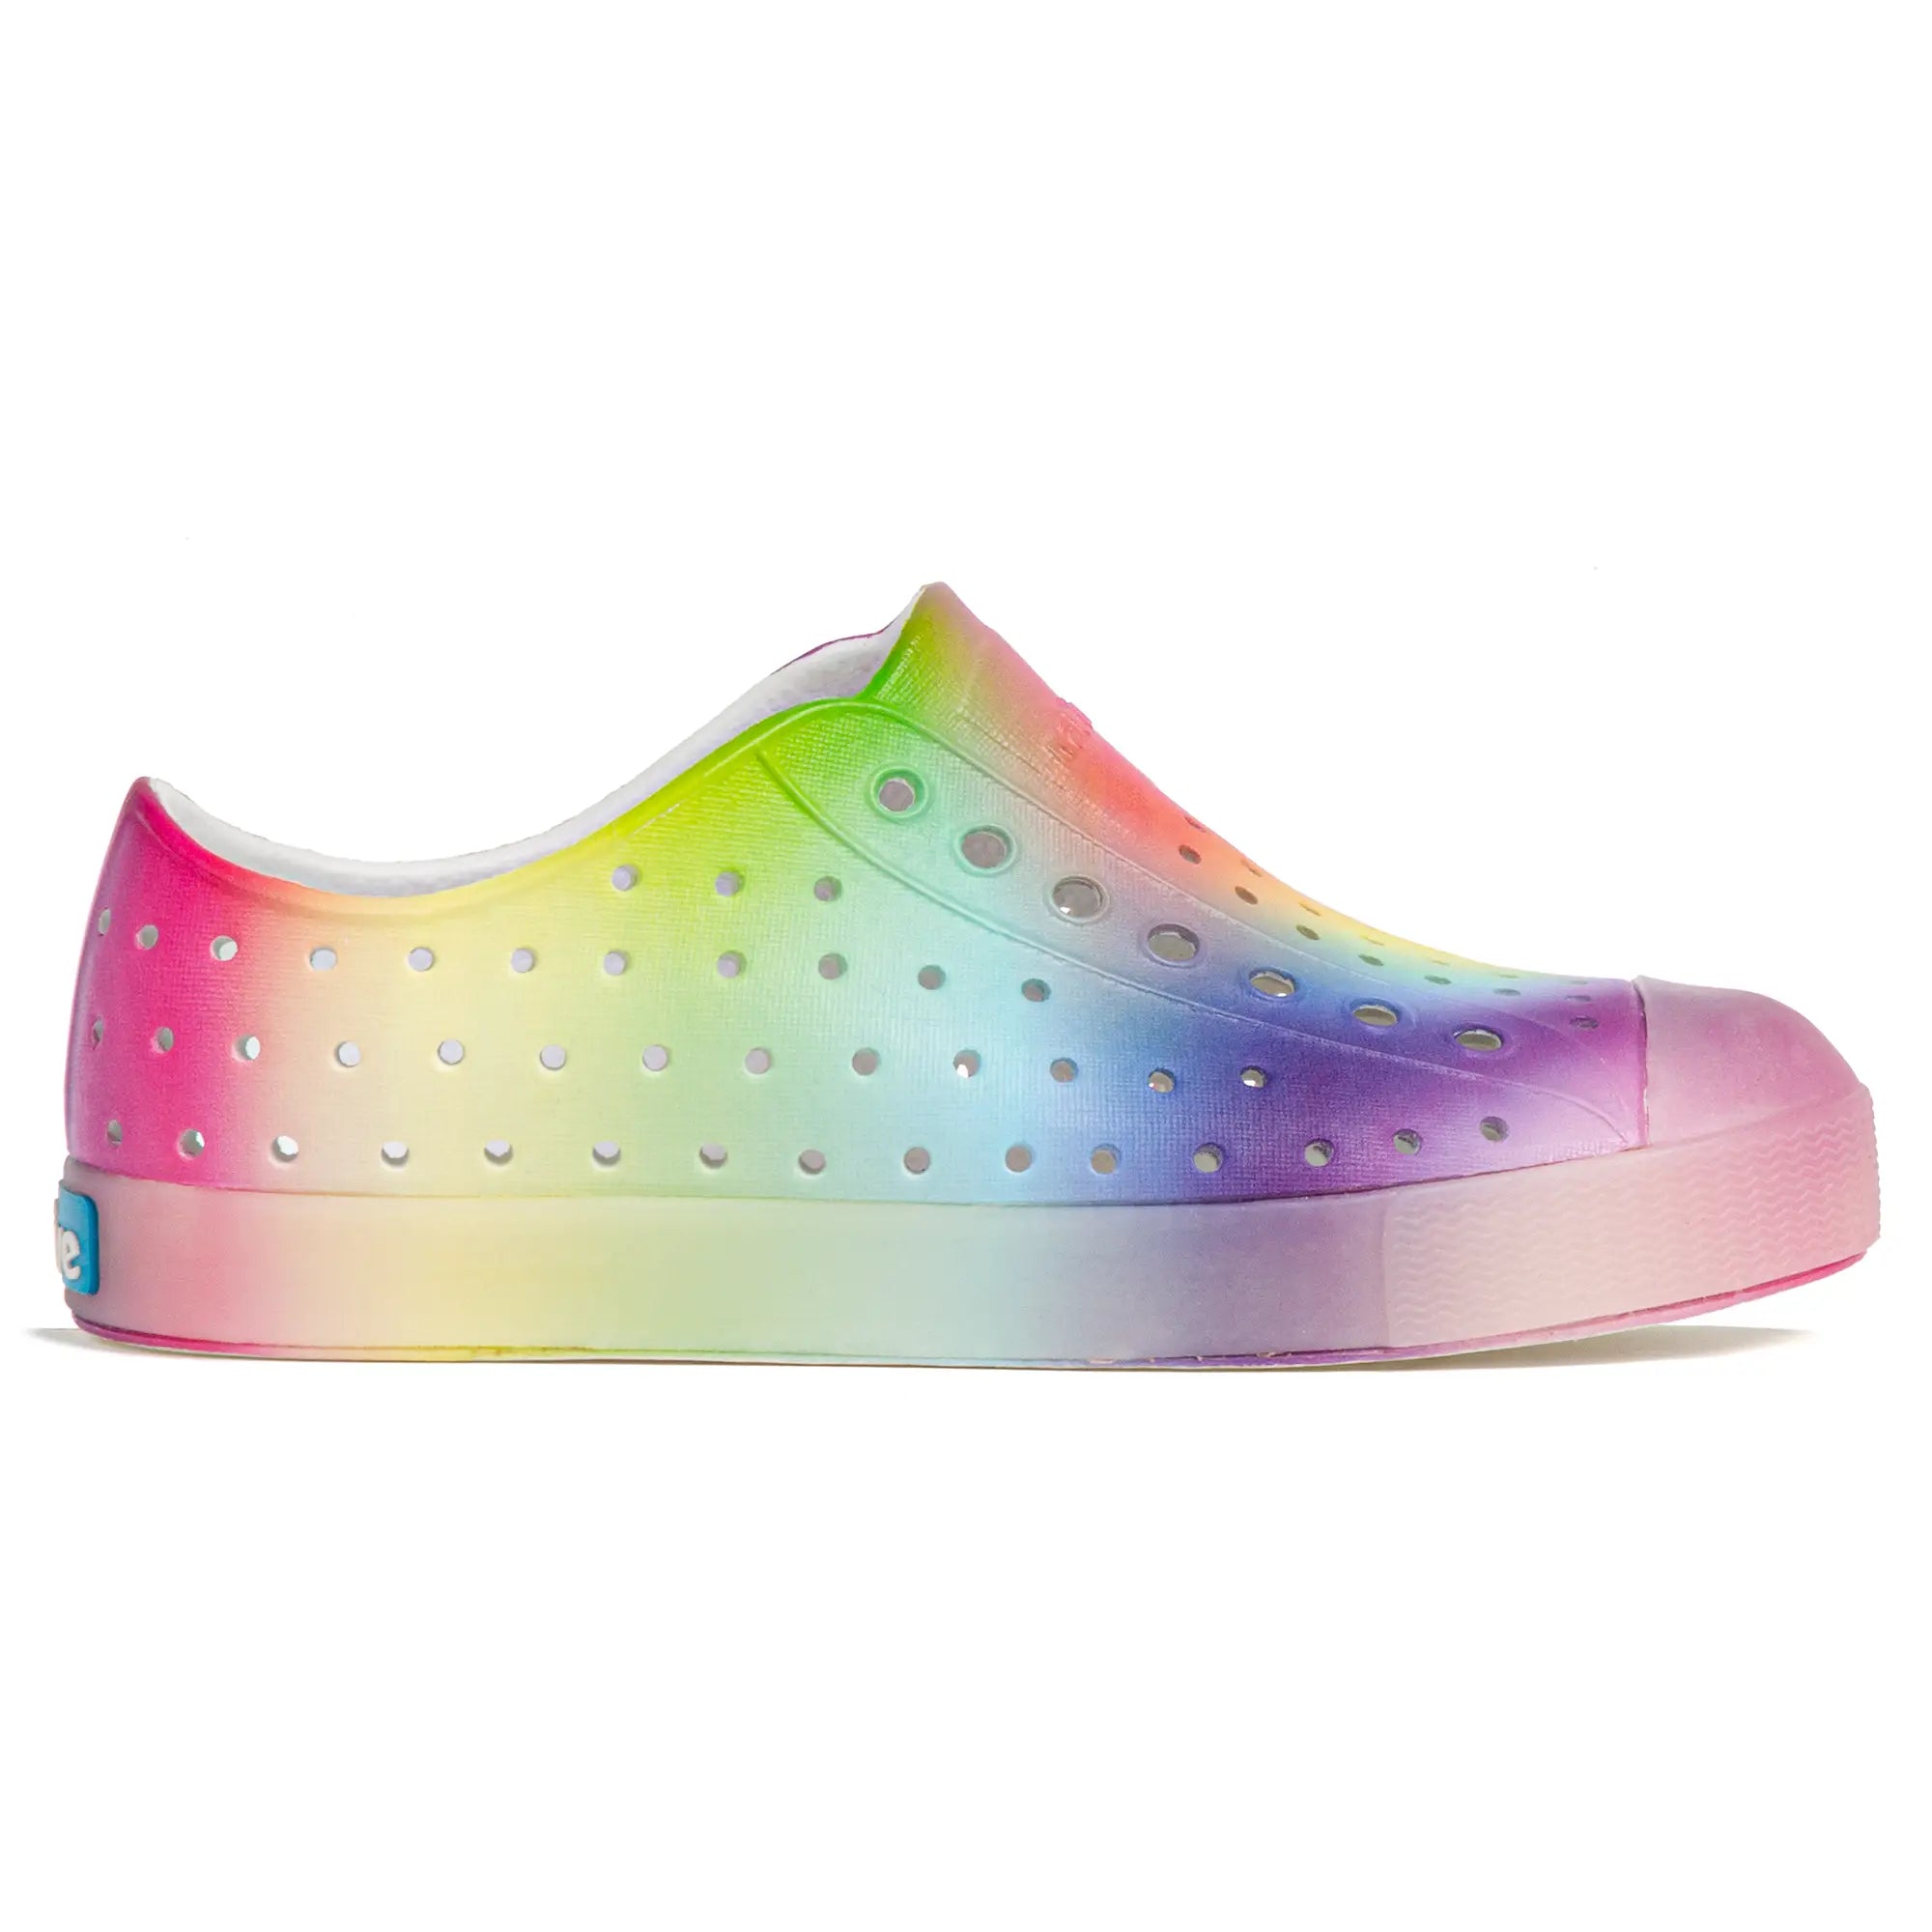 Junior Jefferson Water shoe - Rainbow